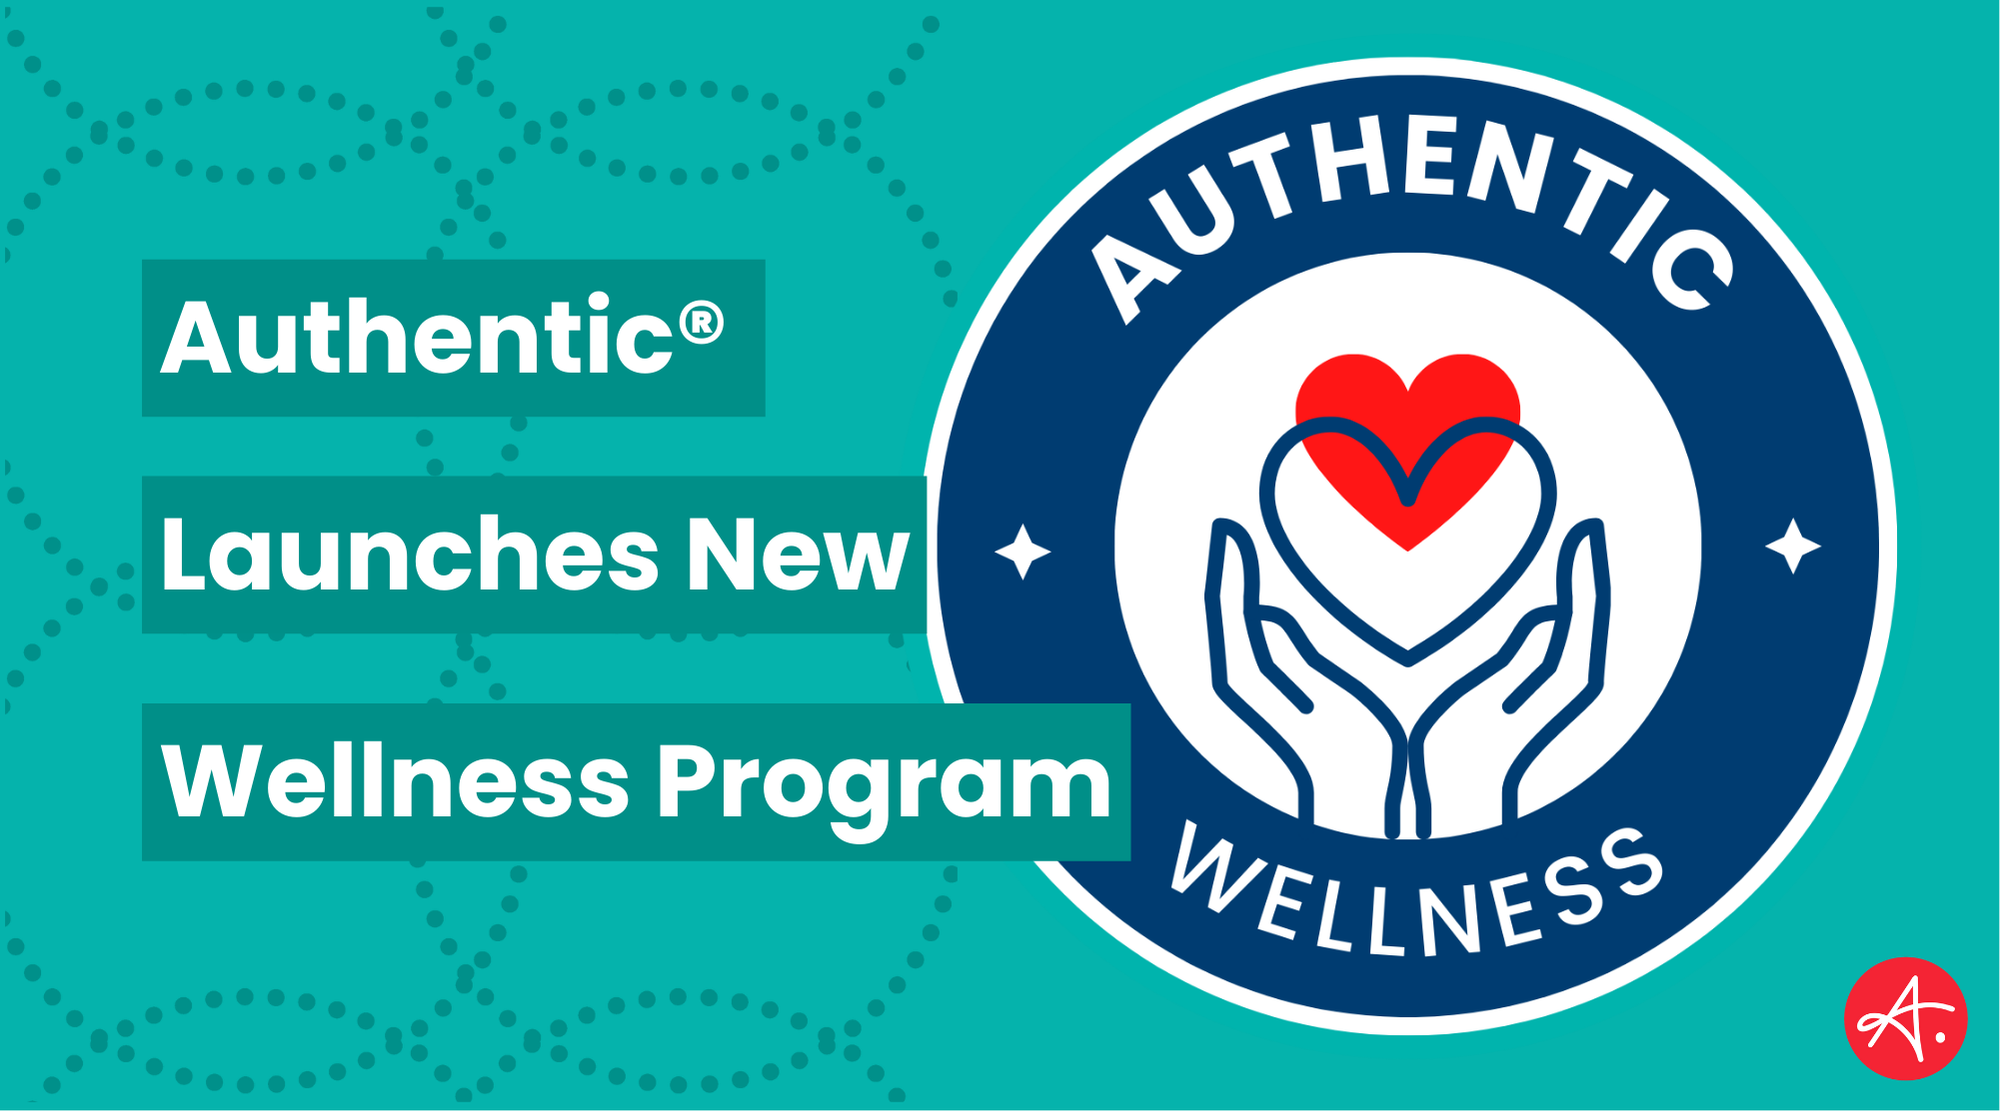 Authentic Launches New Wellness Program